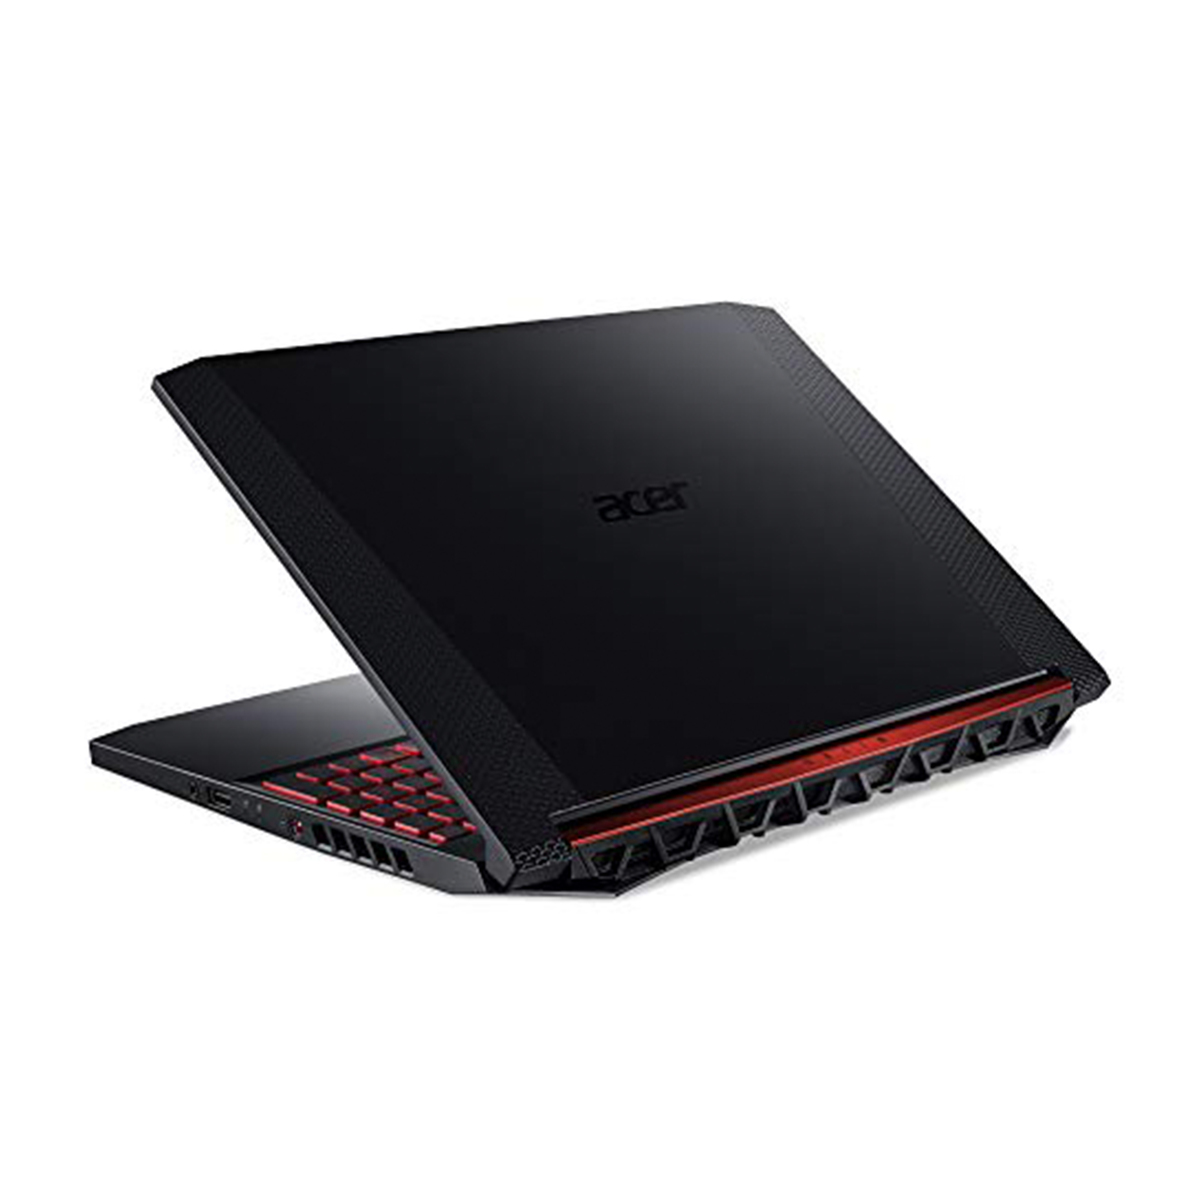 Acer Nitro 5 PH315-5 Gaming Laptop, Intel Core i7-9750H, 15.6" FHD, 1TB SSD, 16GB RAM, 6GB NVIDIA GeForce GTX 1660Ti,Black